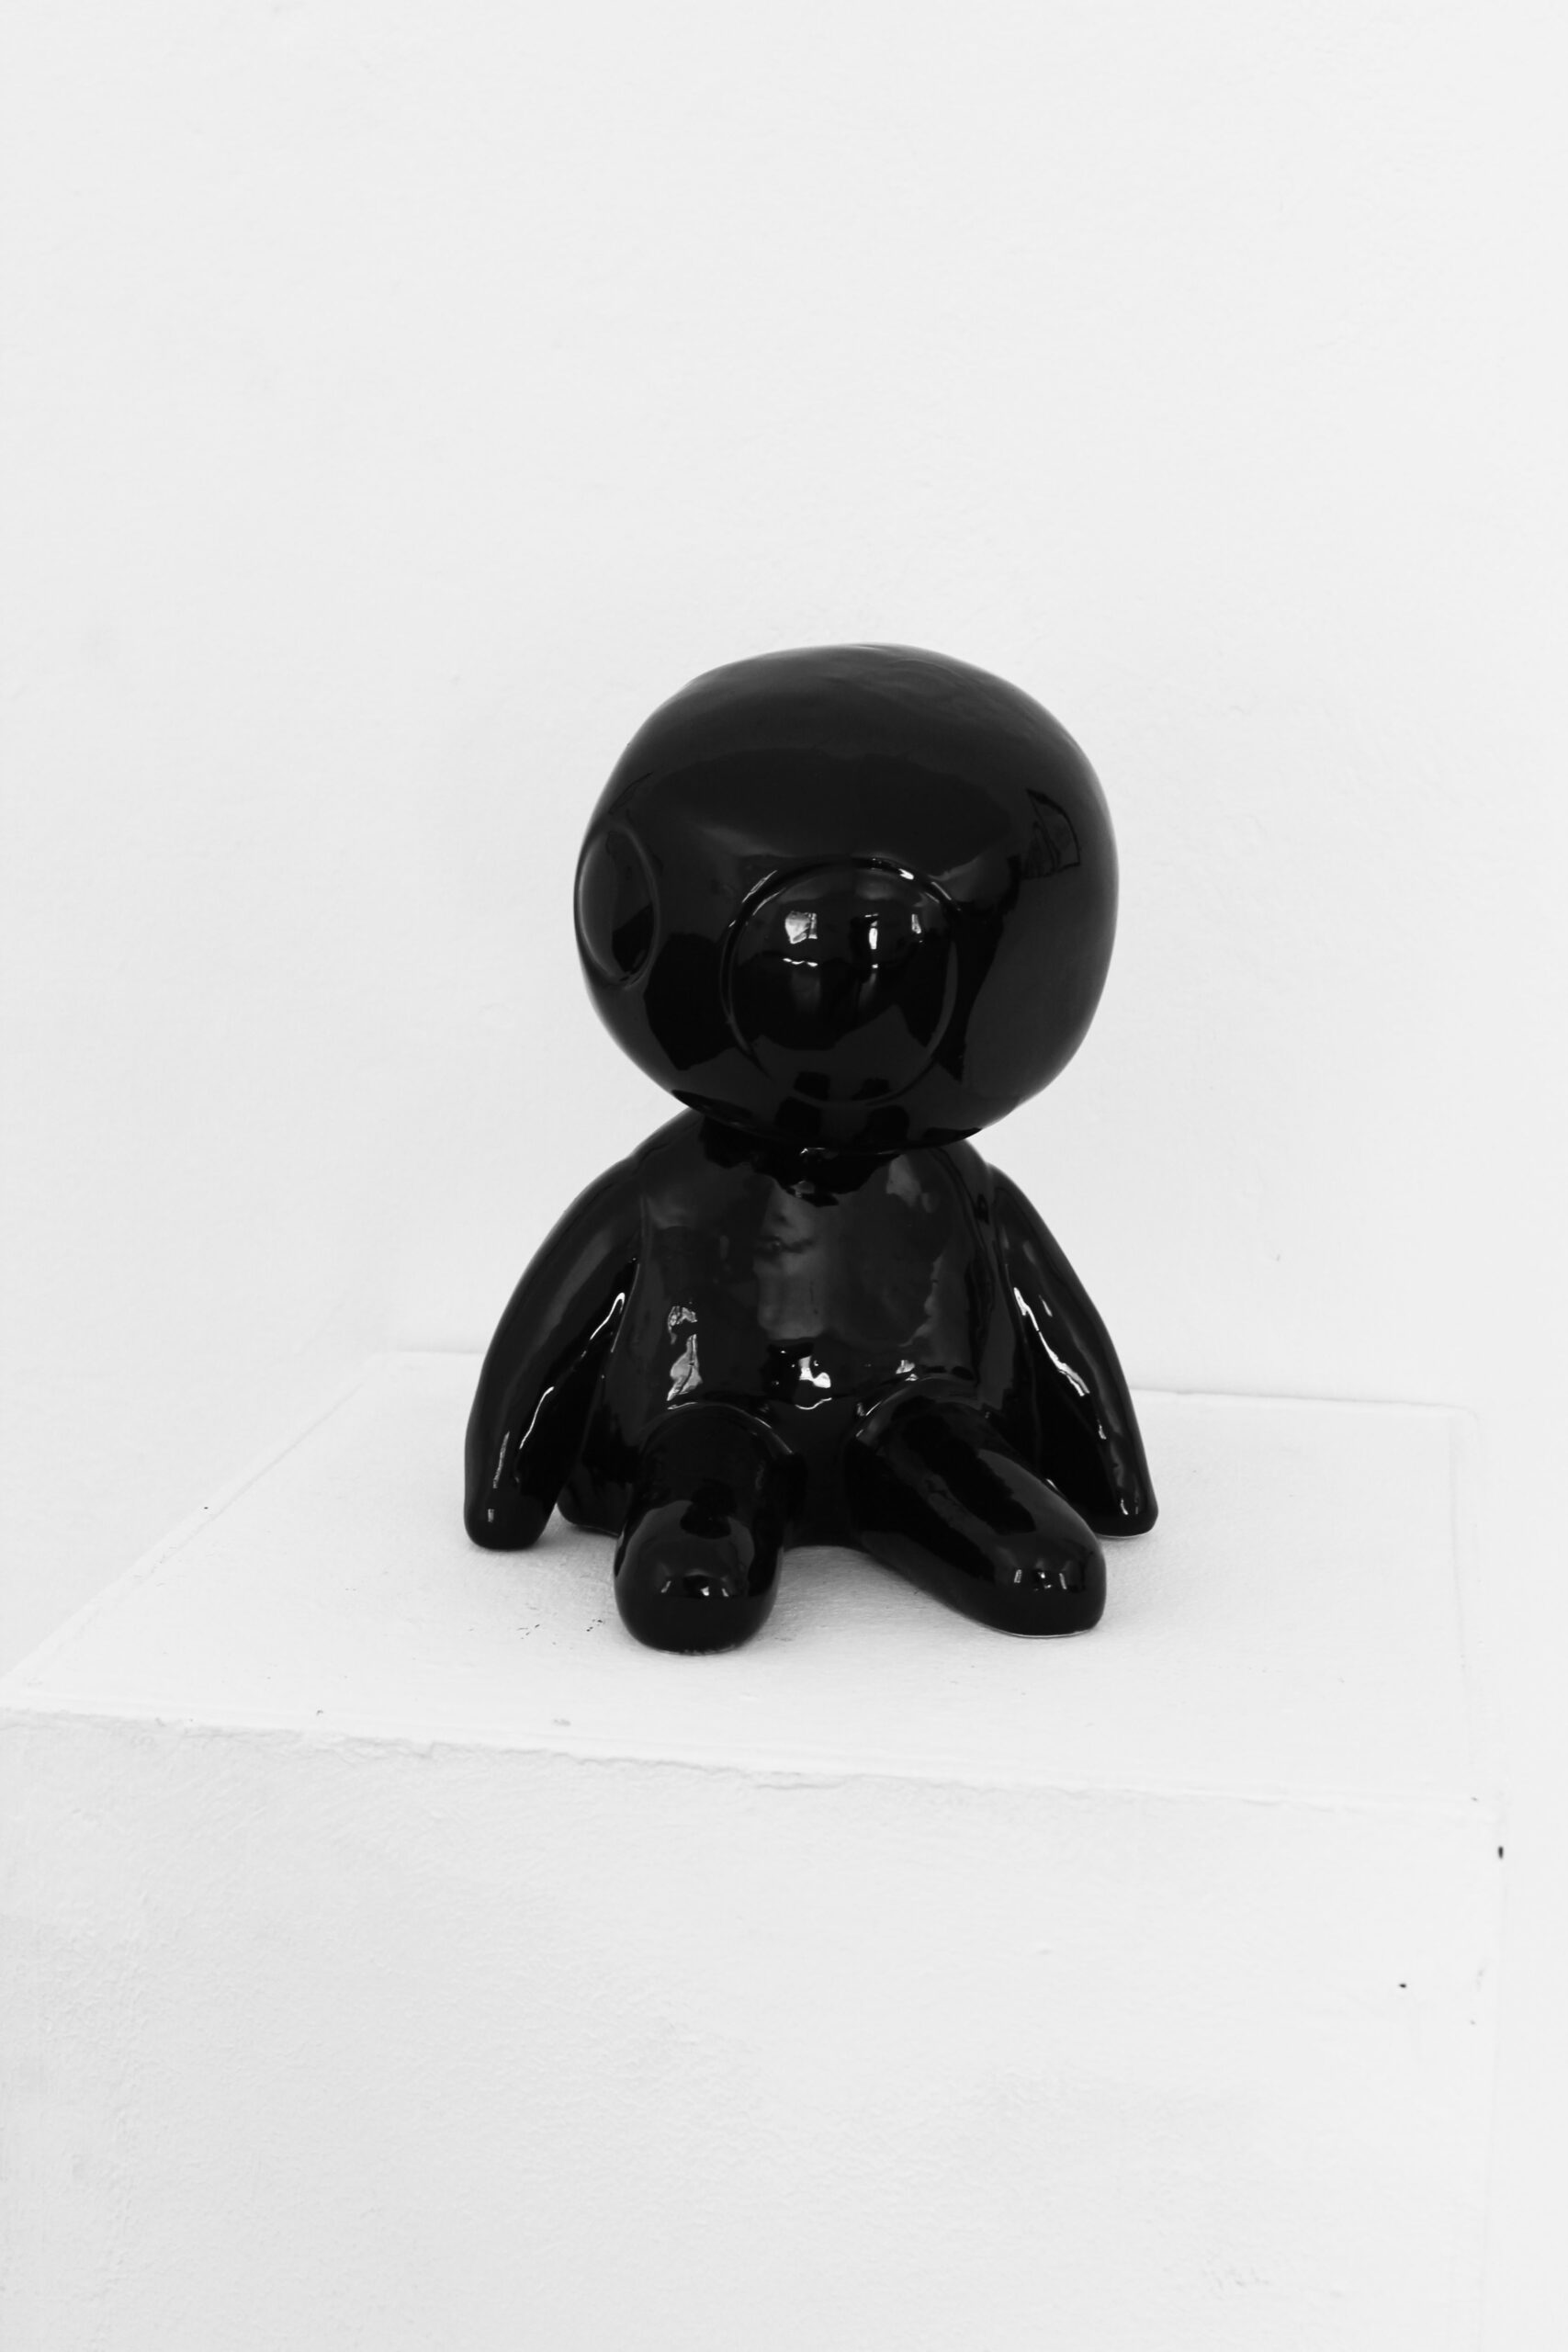 Ceramica maiolica e smalto nero - 32 x 23 x 21 cm